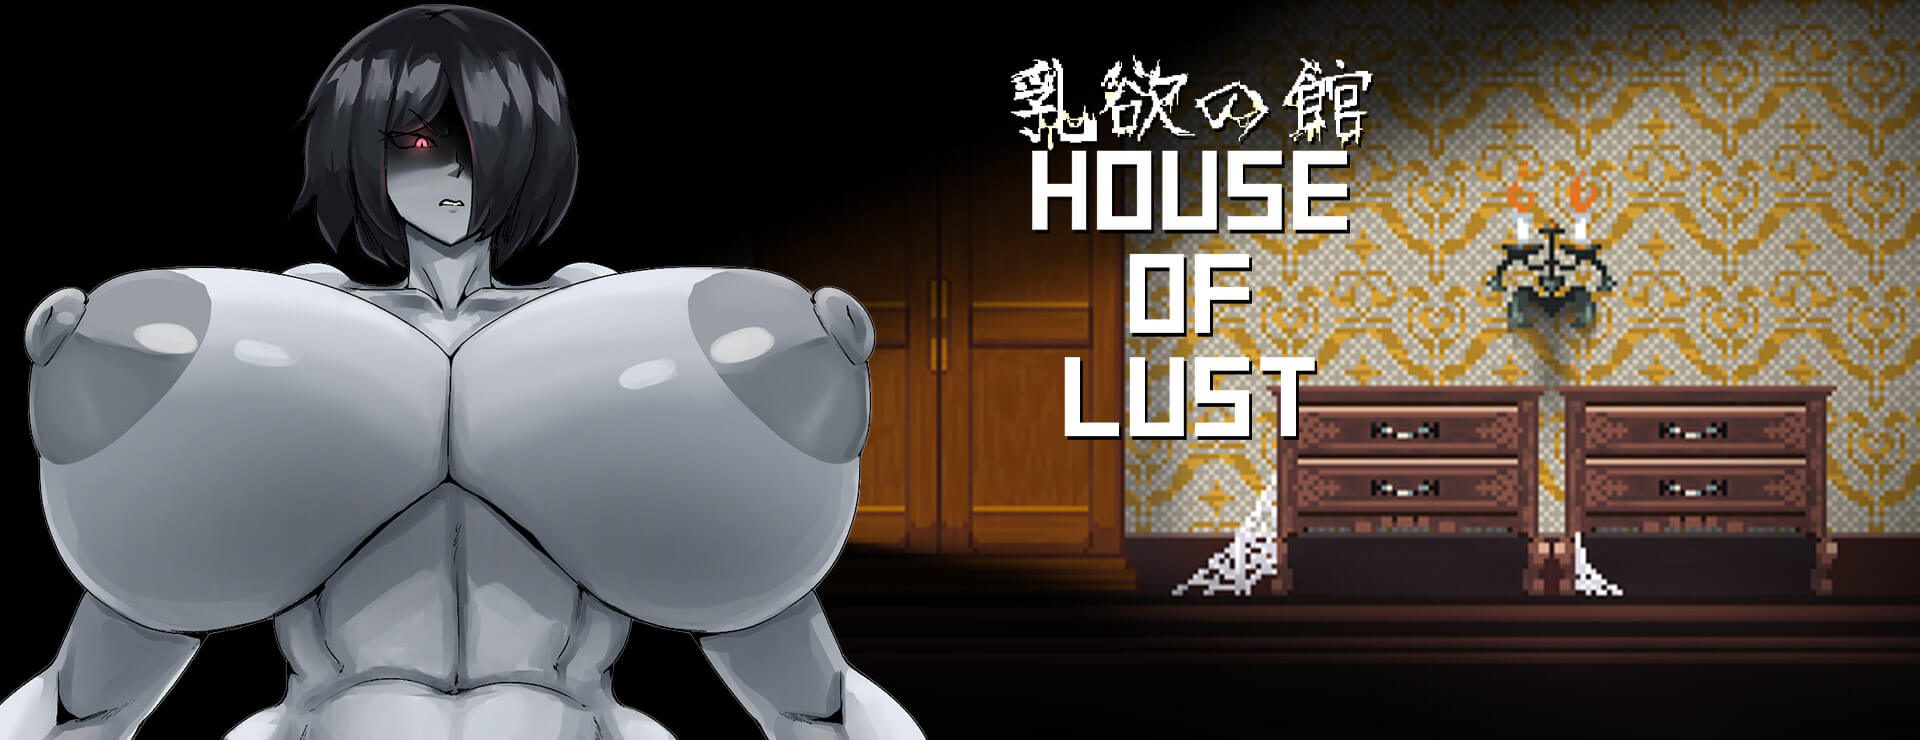 House of Lust - シミュレーション ゲーム